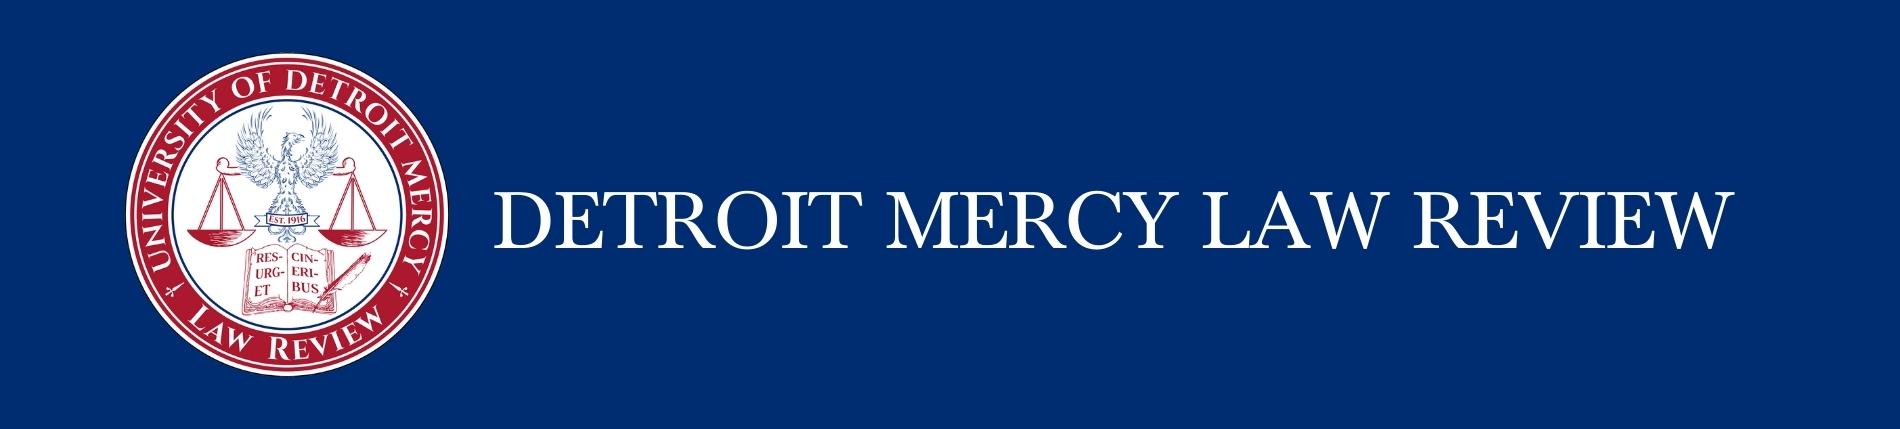 Detroit Mercy Law Banner